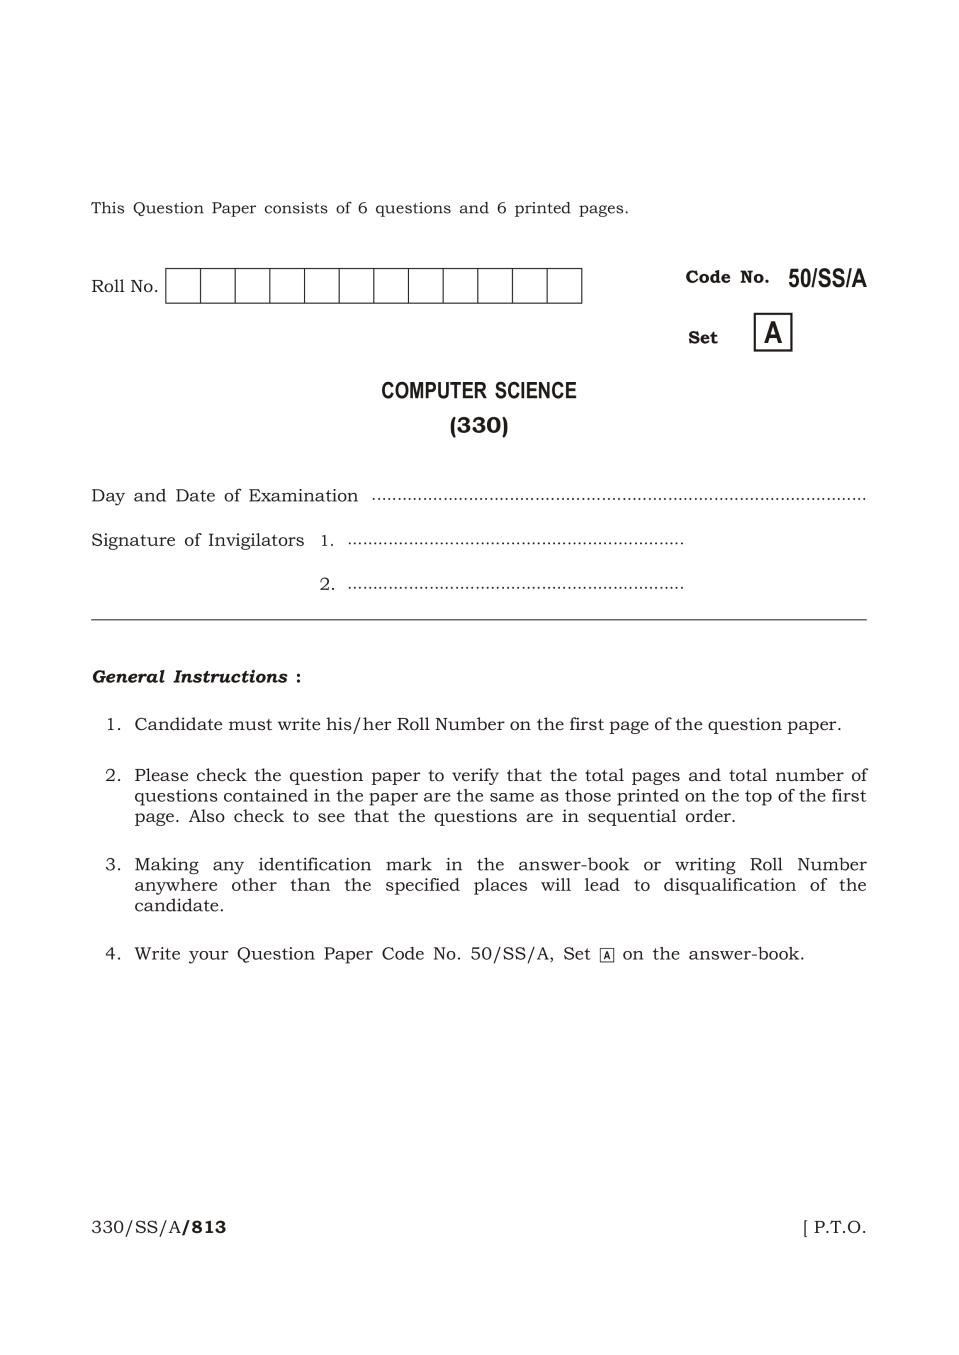 NIOS Class 12 Question Paper Apr 2015 - Computer Science - Page 1